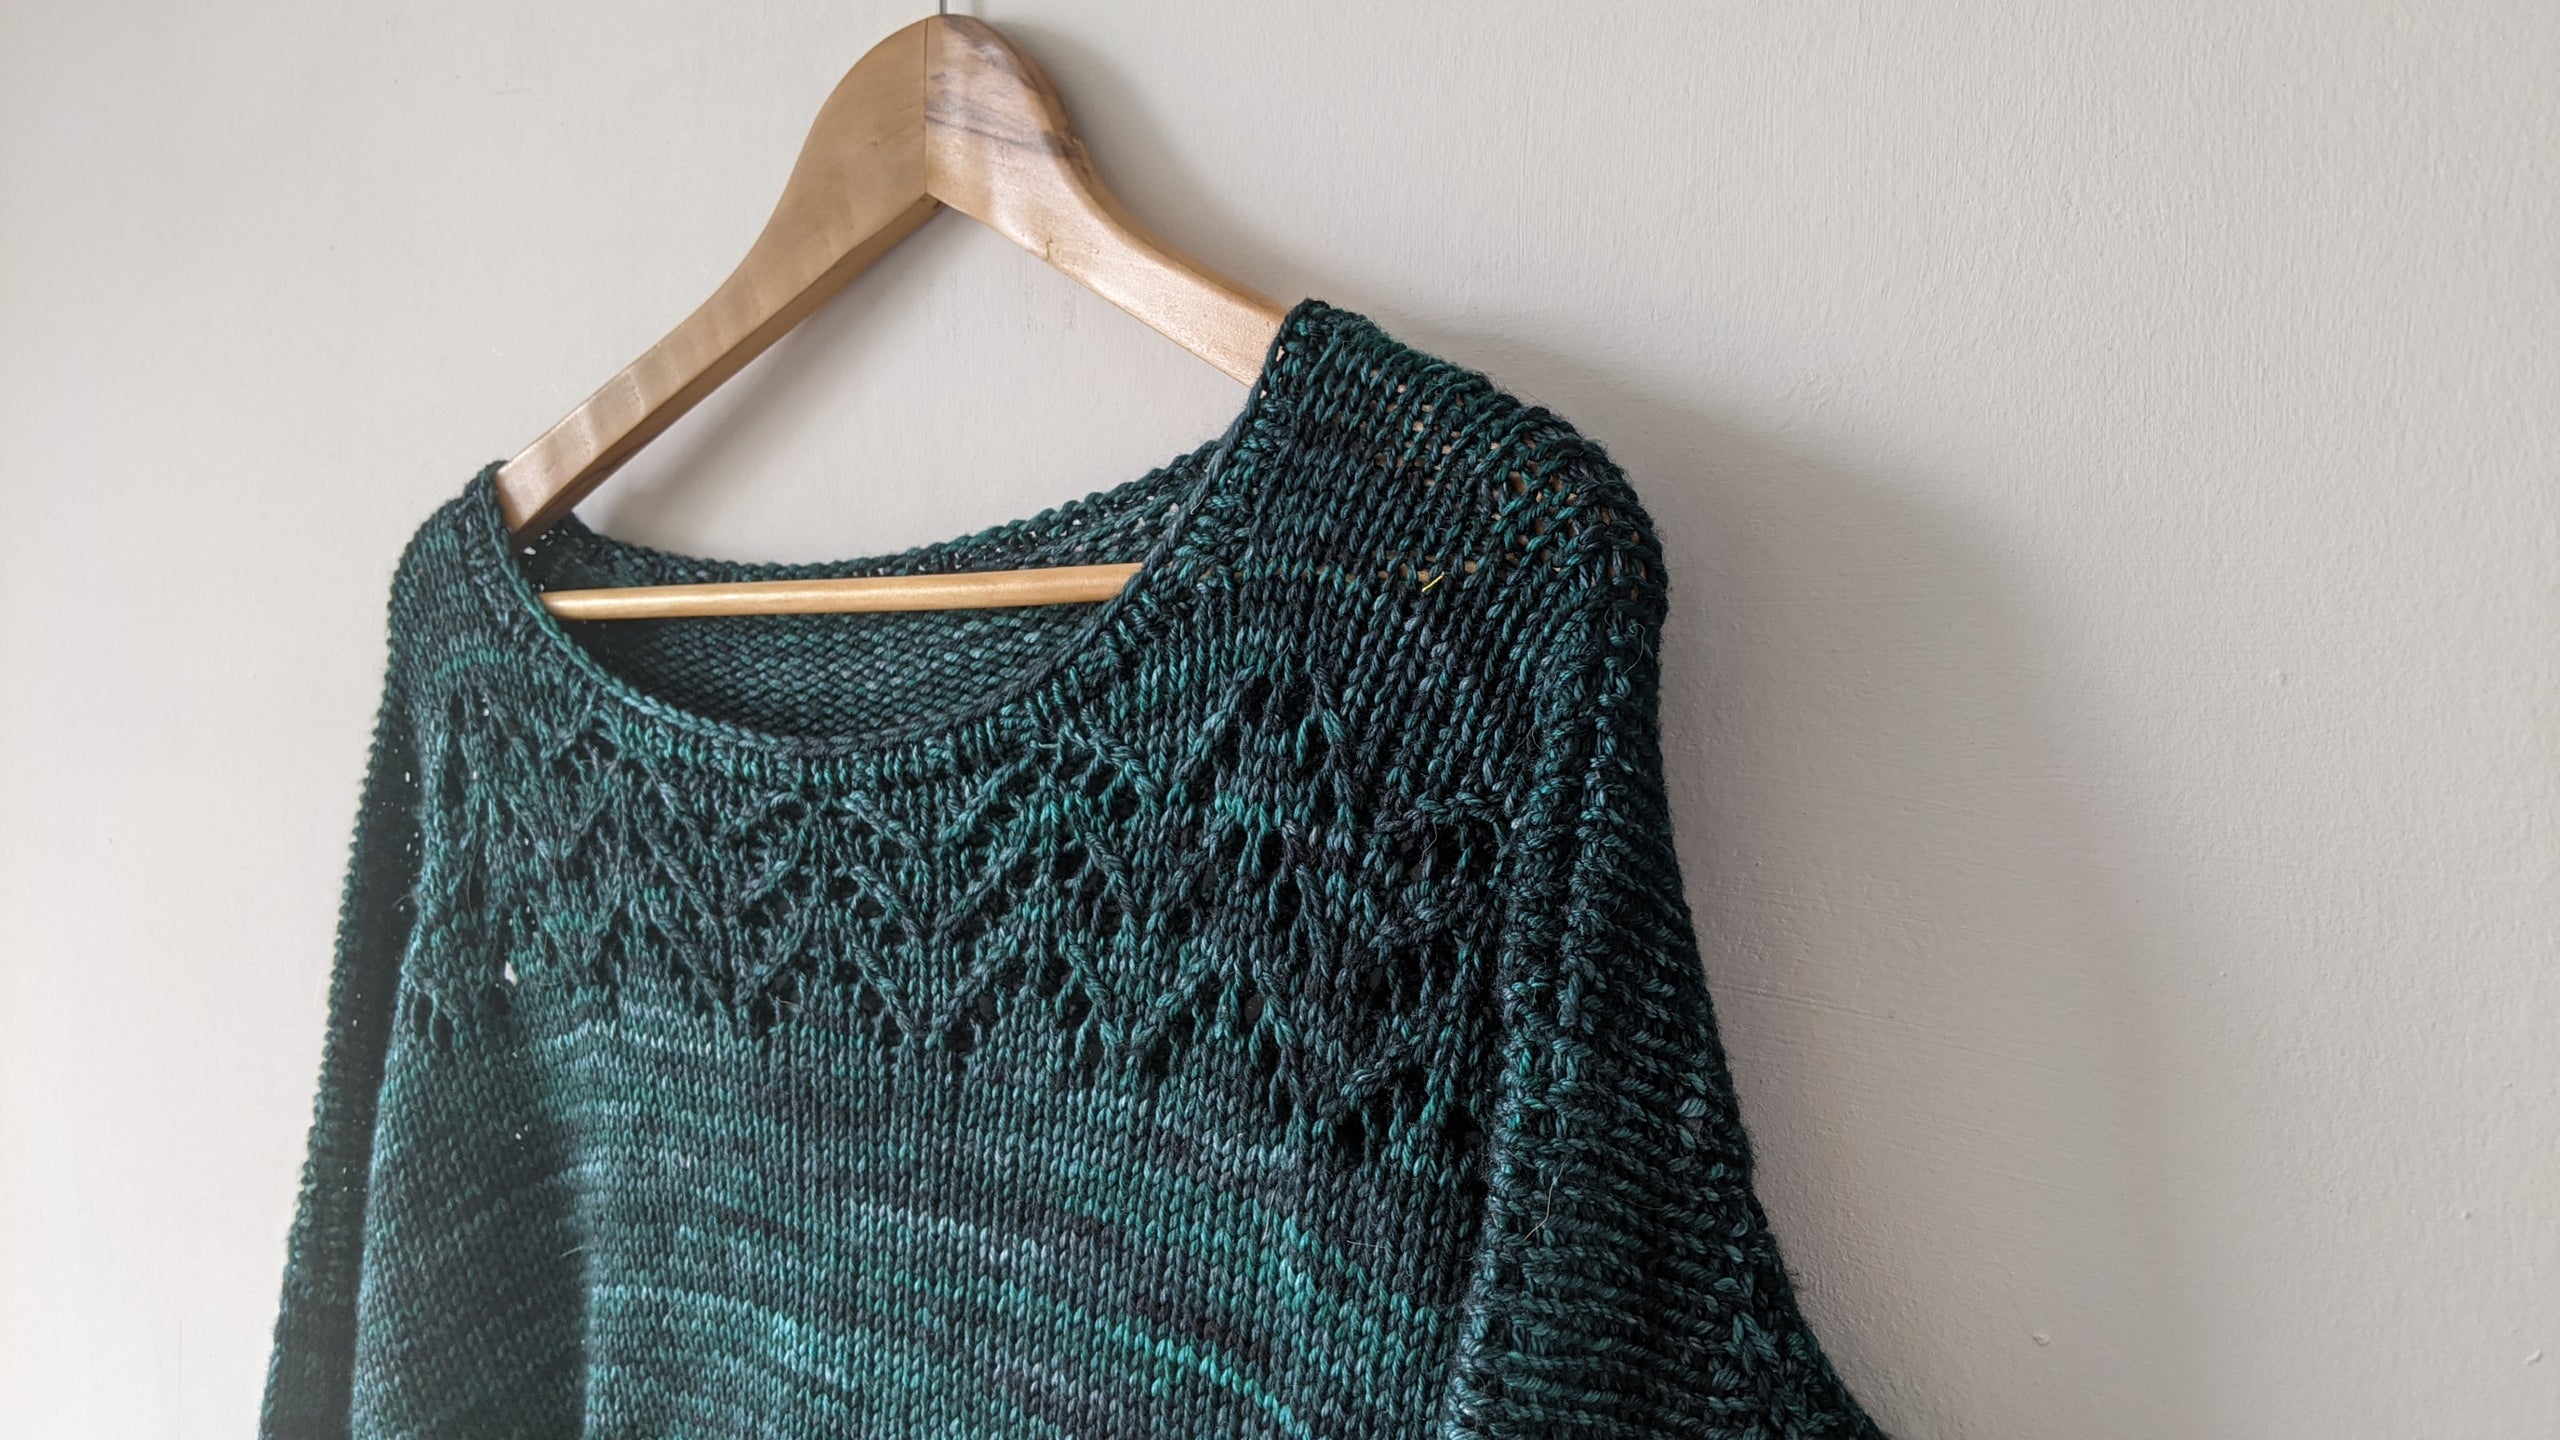 Tentsmuir Sweater knitting pattern by Littletheorem Knits